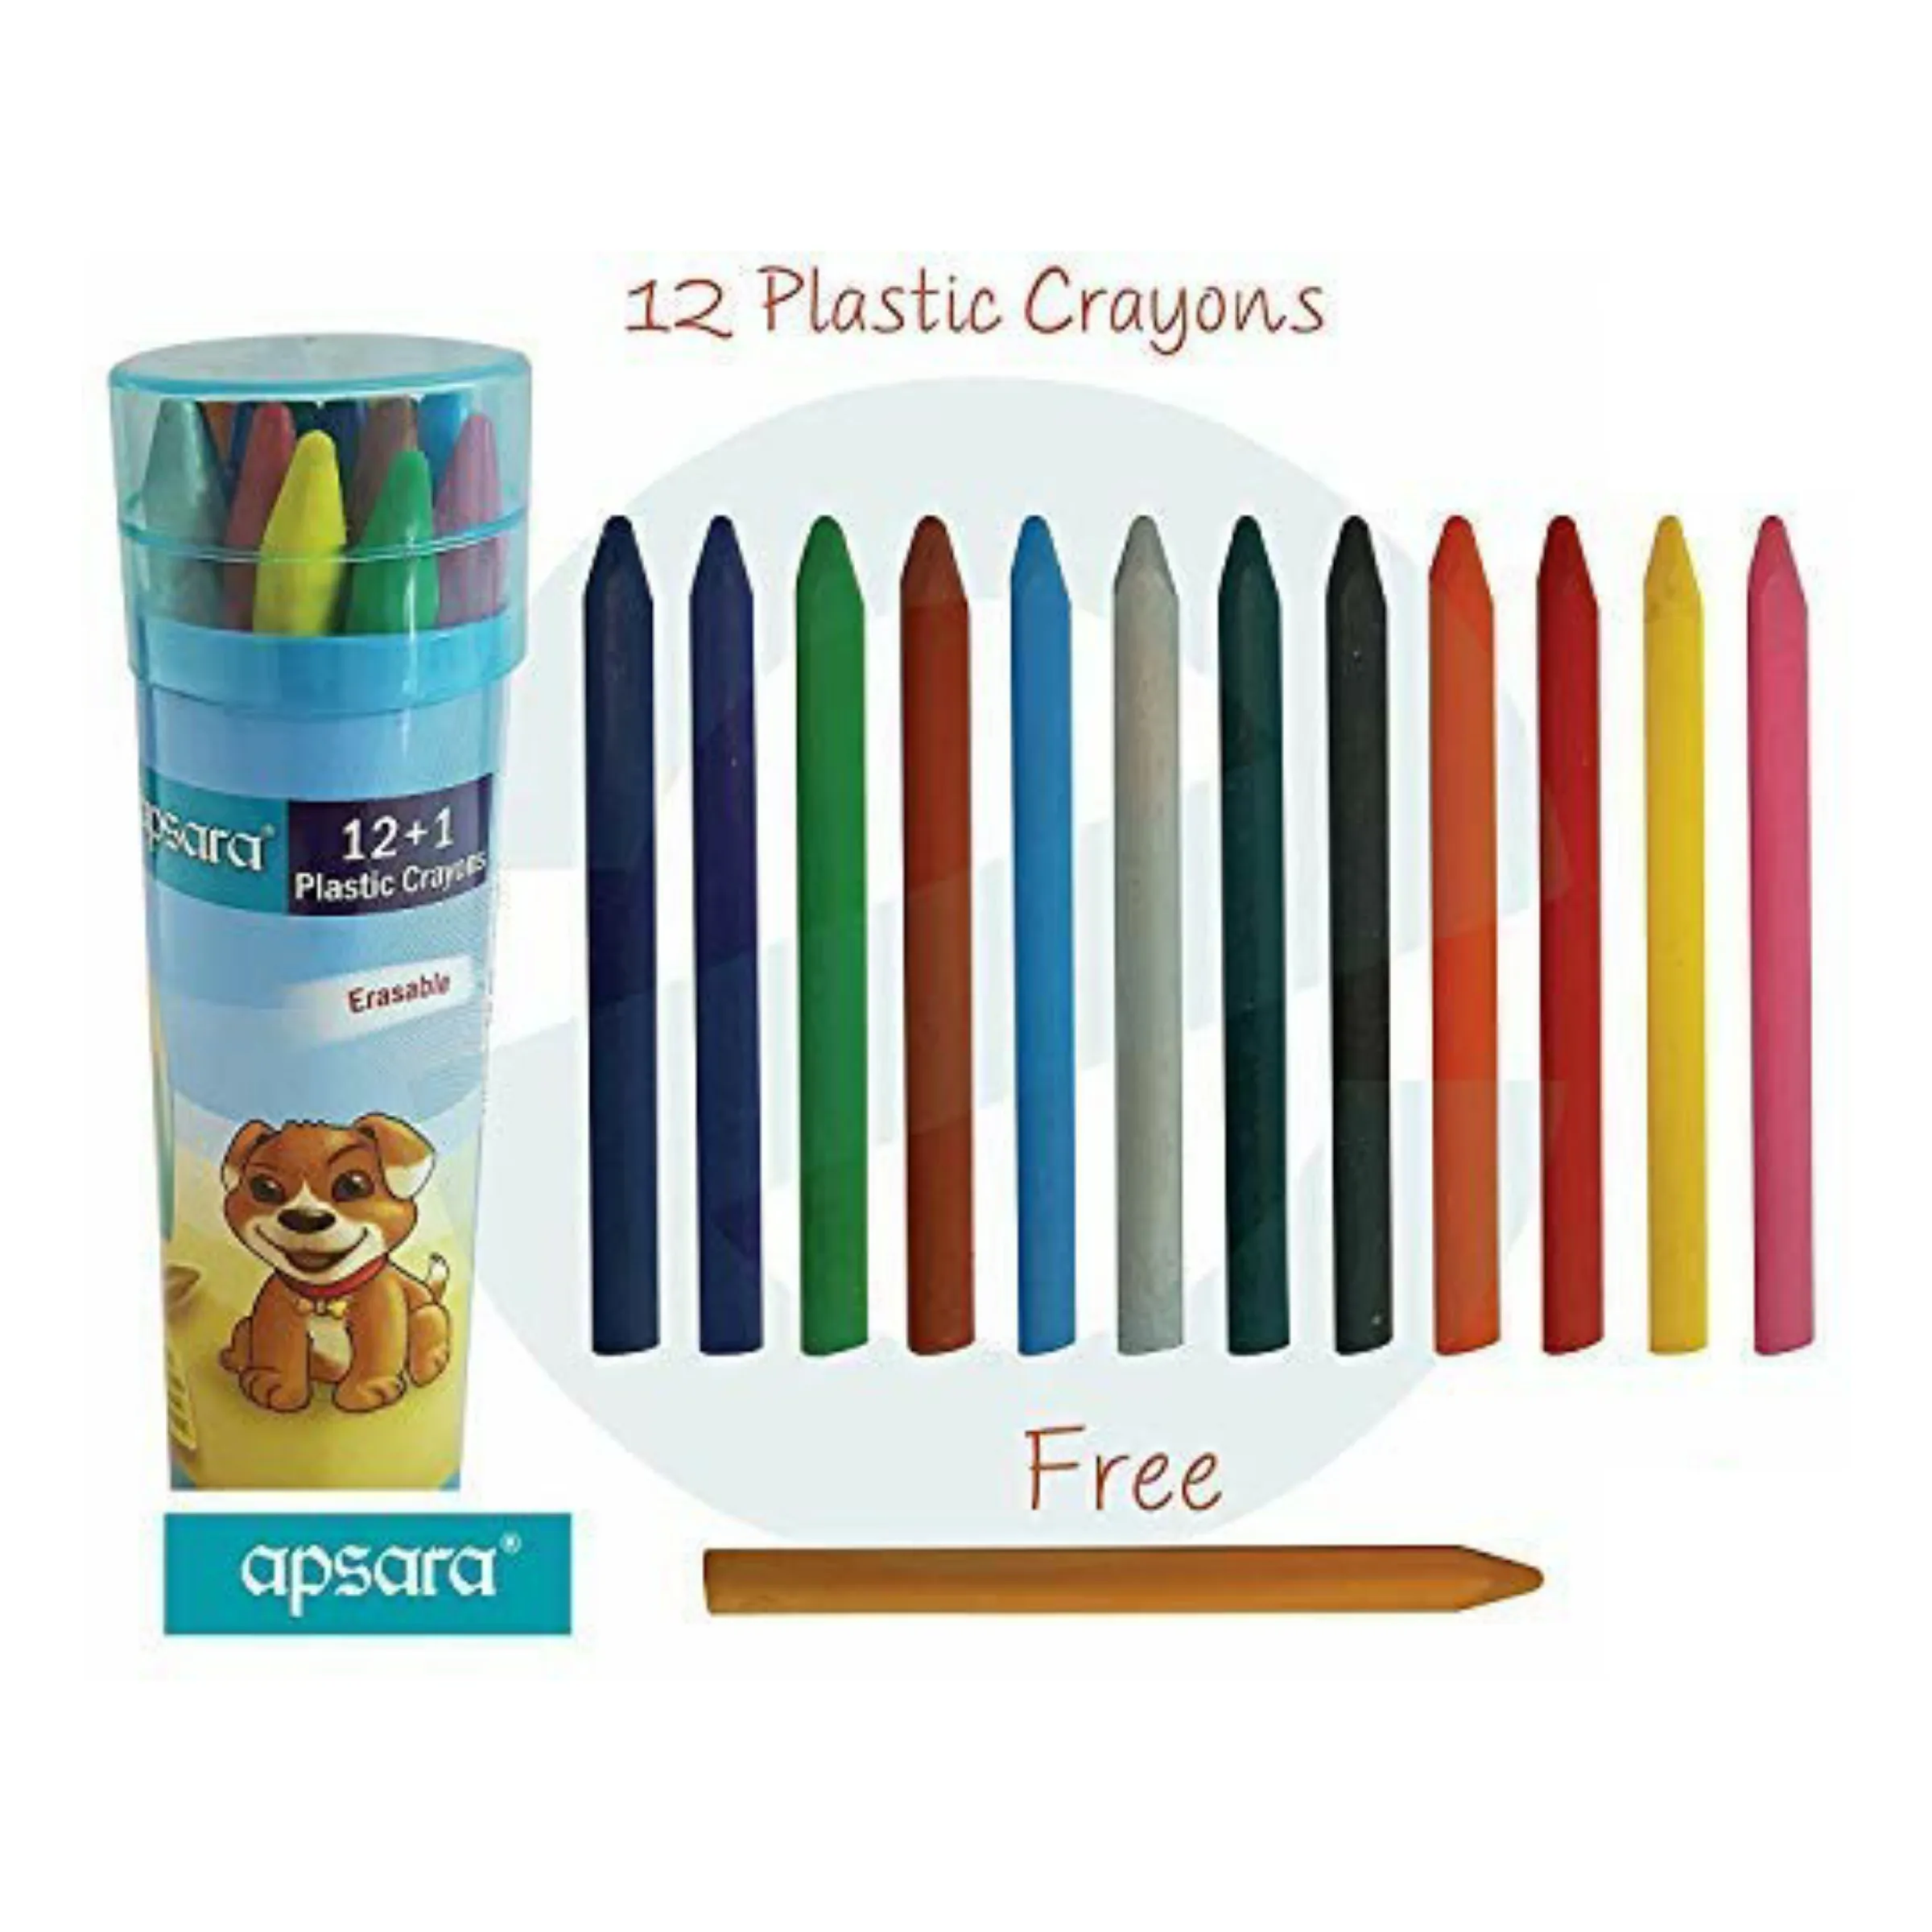 Apsara Plastic Crayons 12 Shades With 1 free Crayon